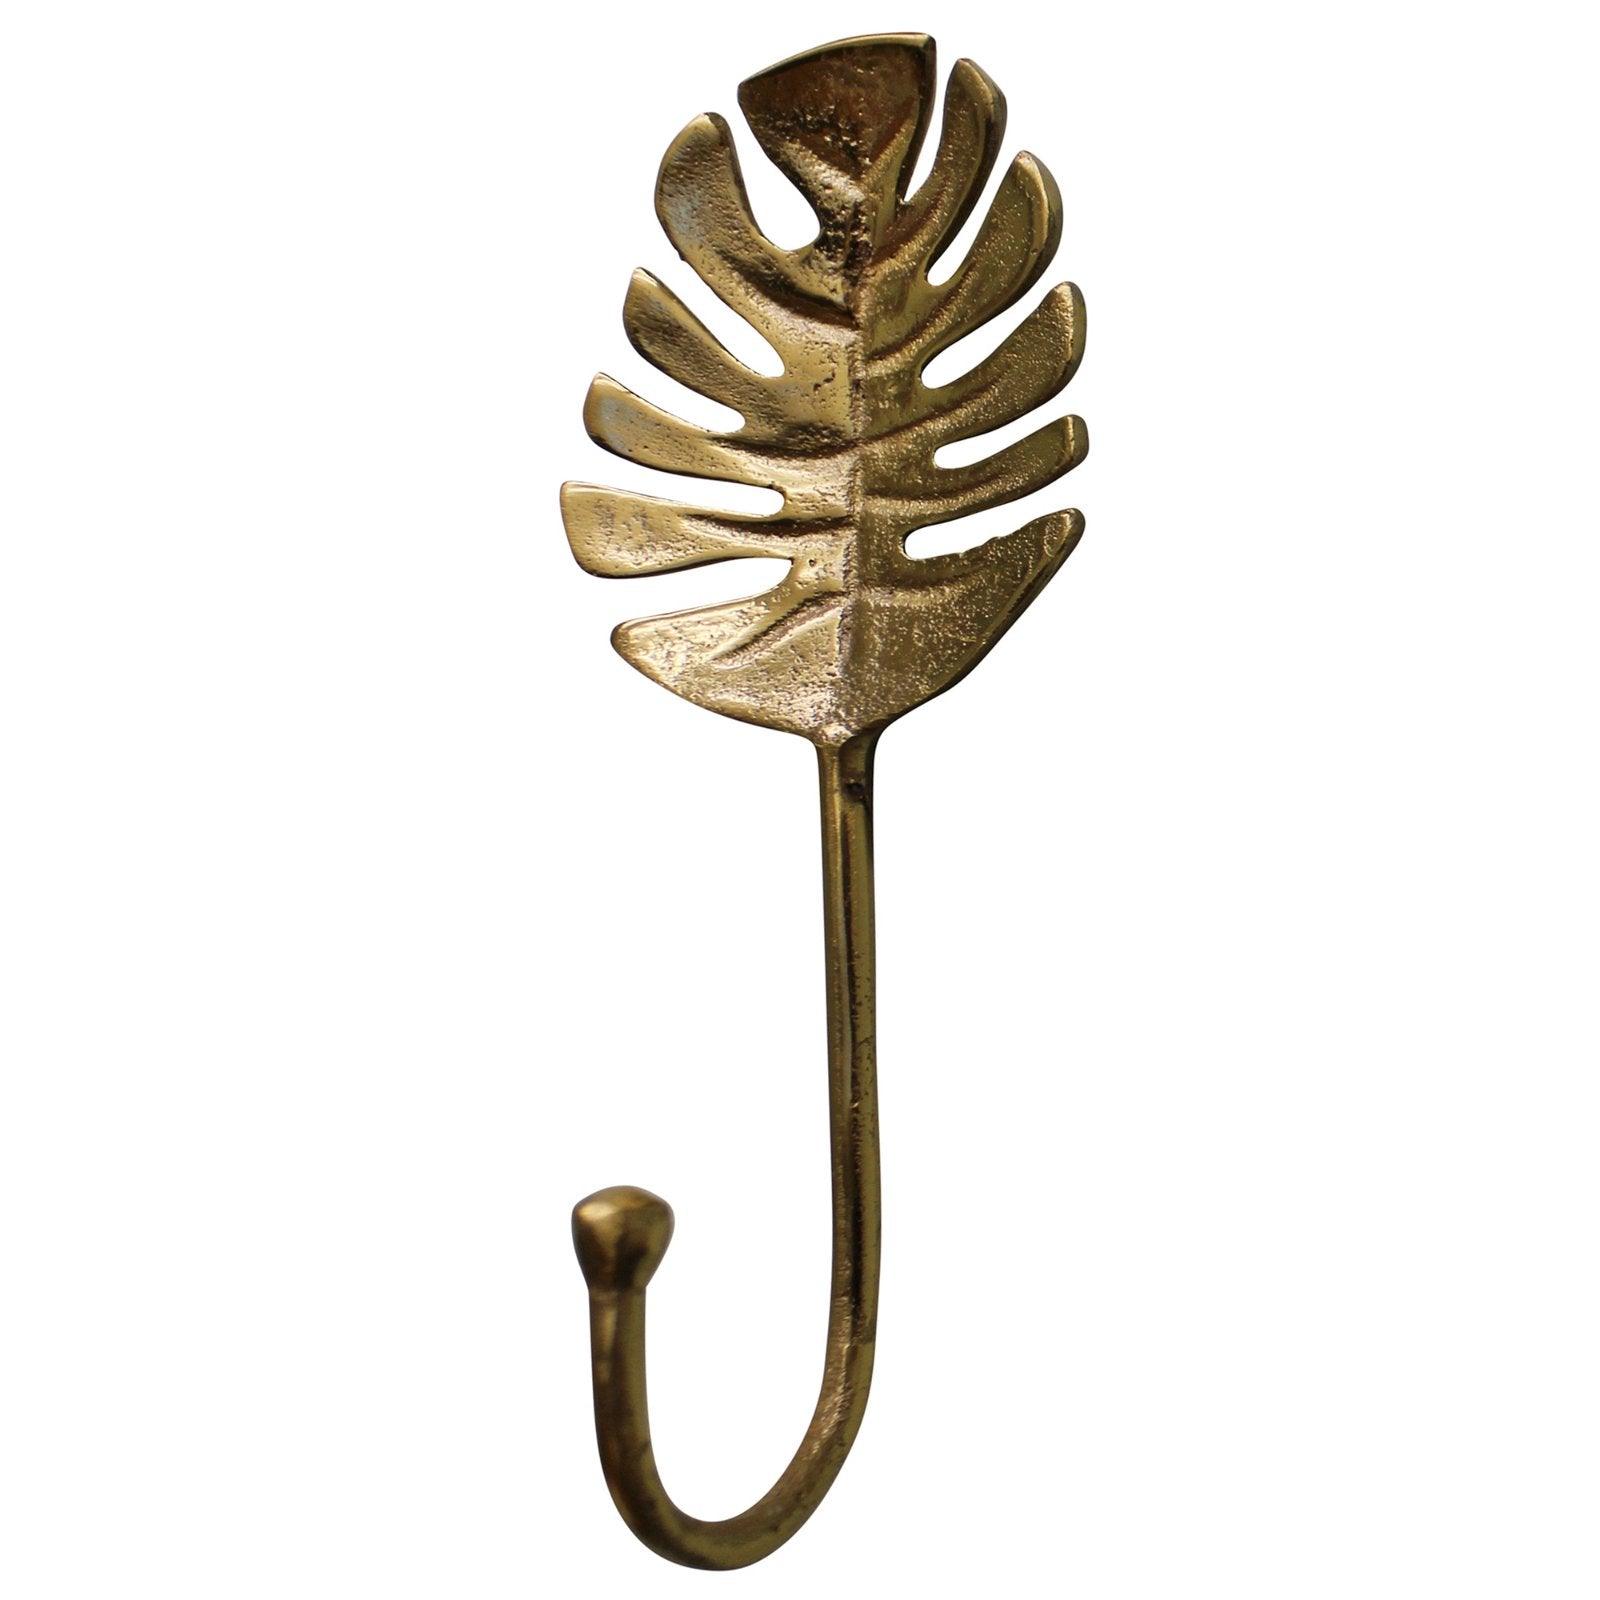 Gold Metal Palm Leaf Coat Hook - £12.99 - Coat Hooks 